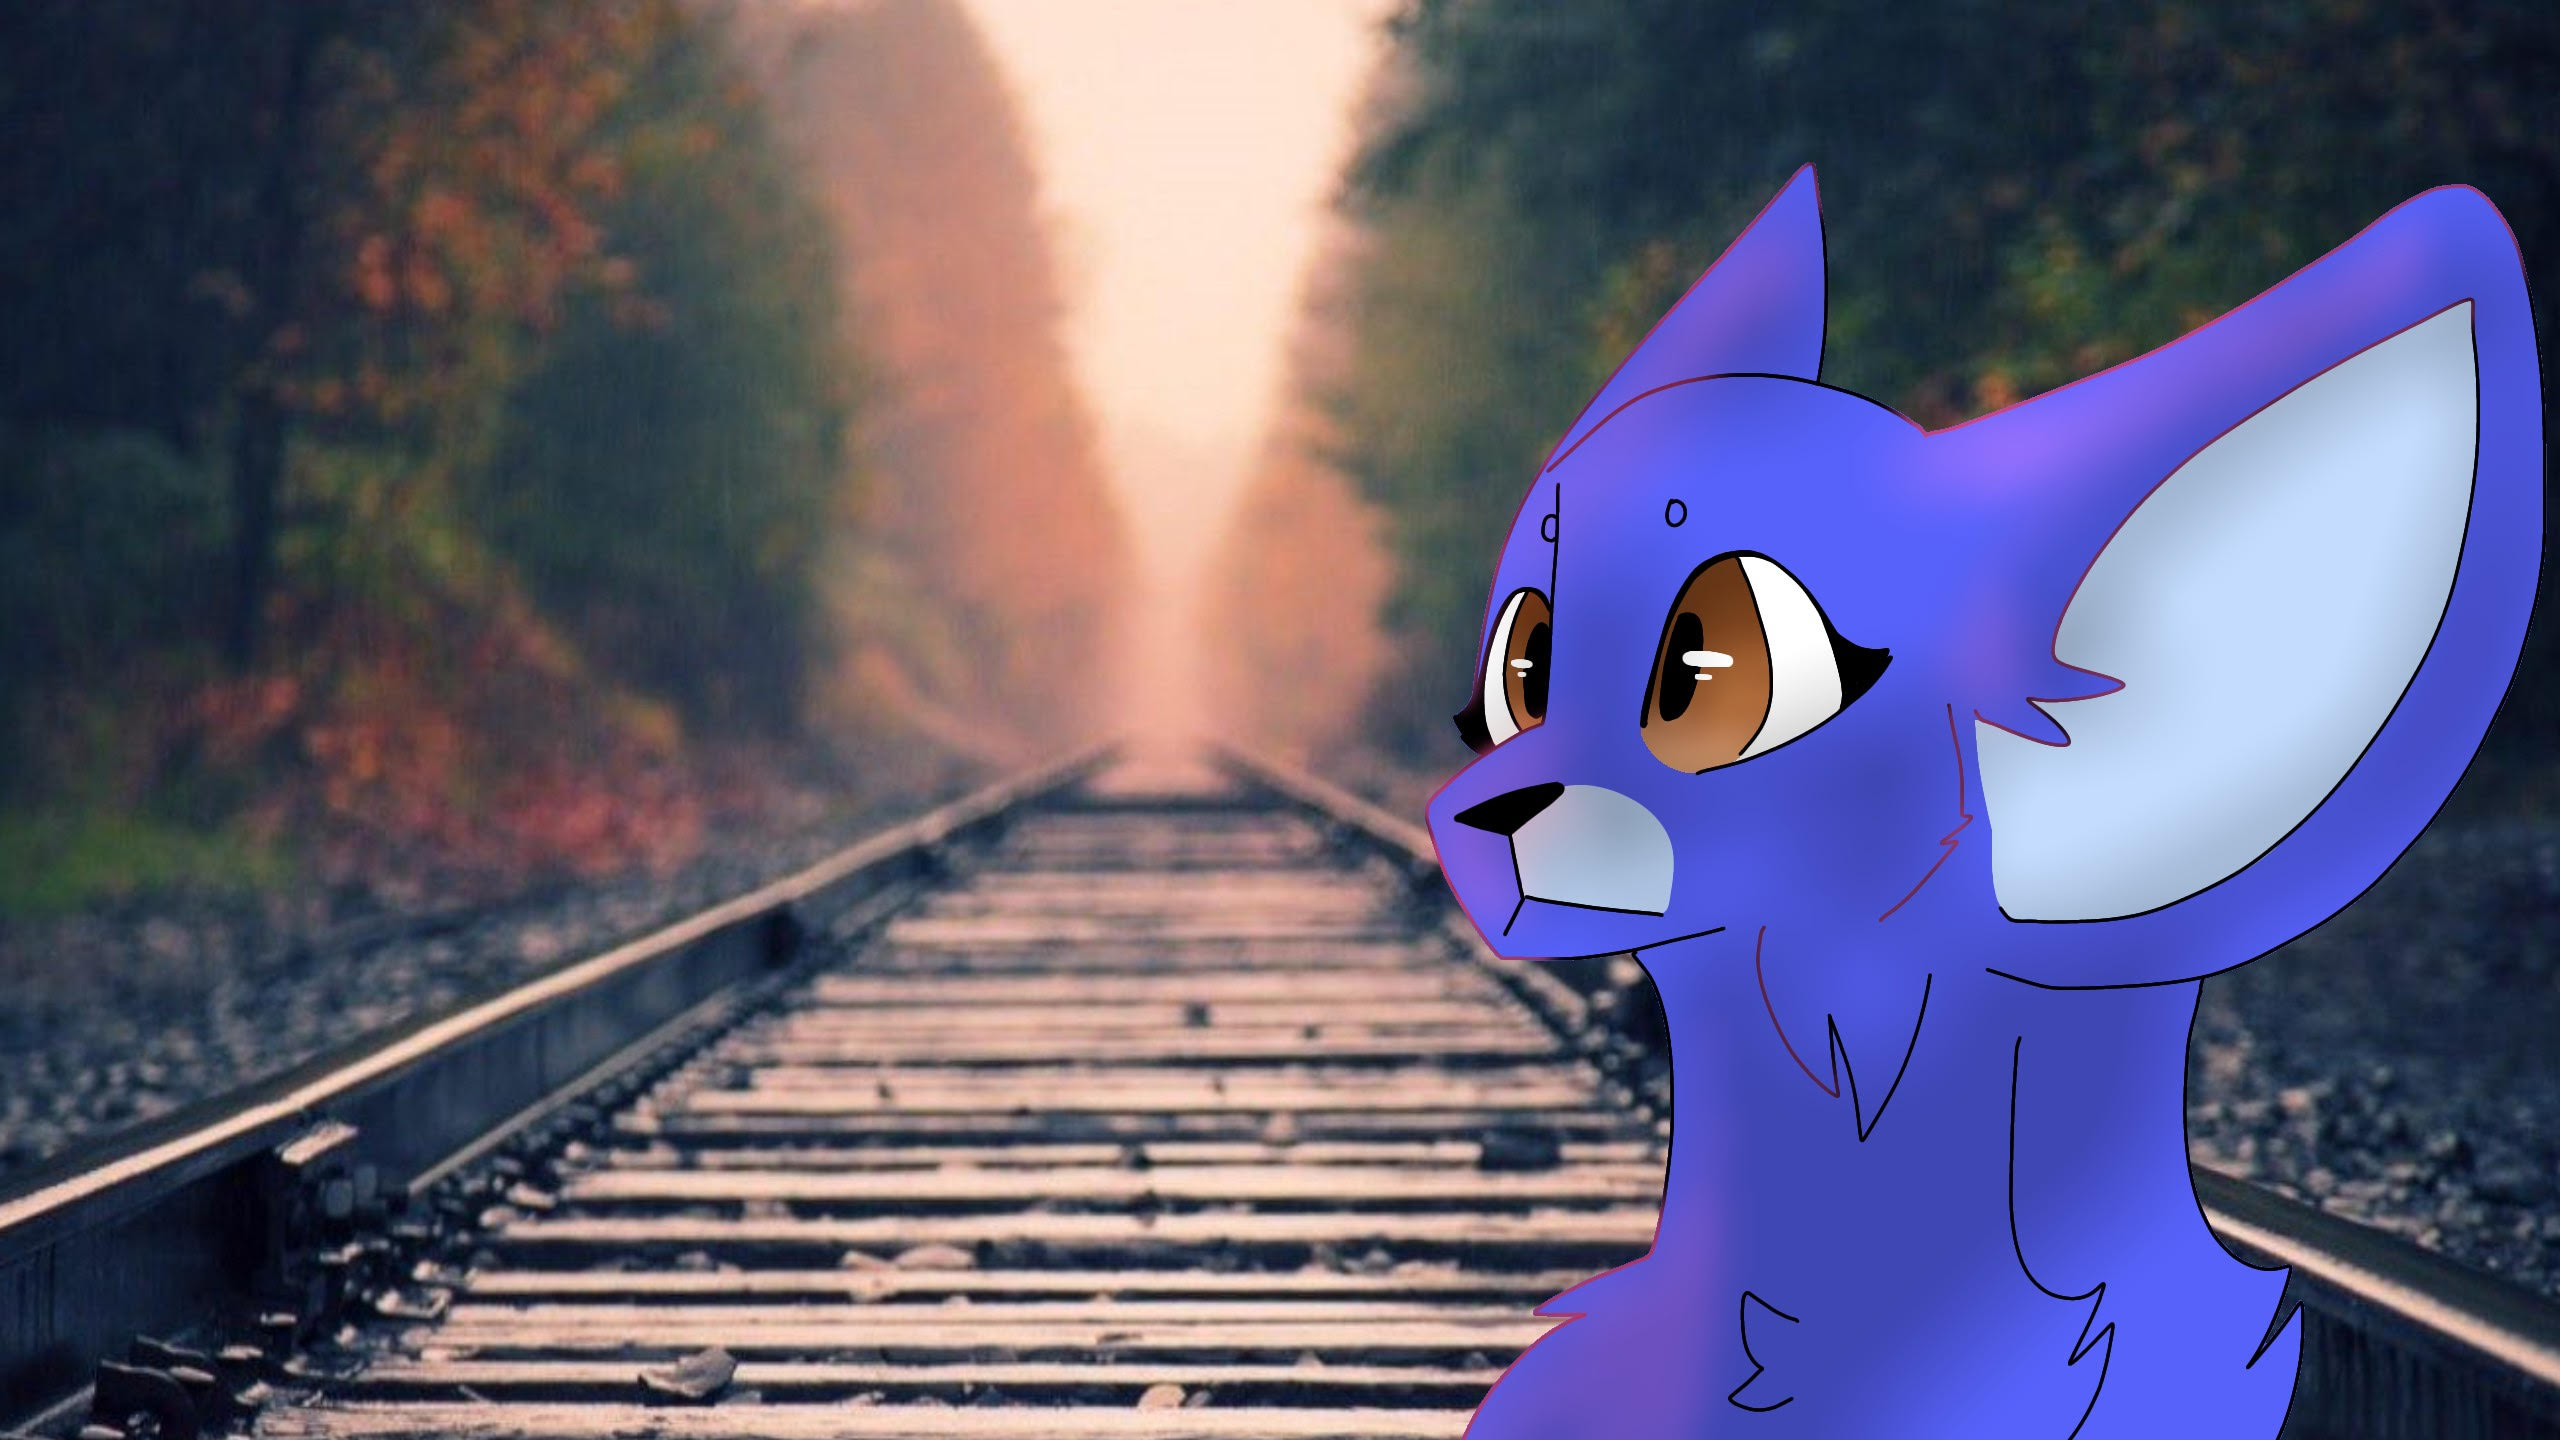 Character Standing Near Train Tracks